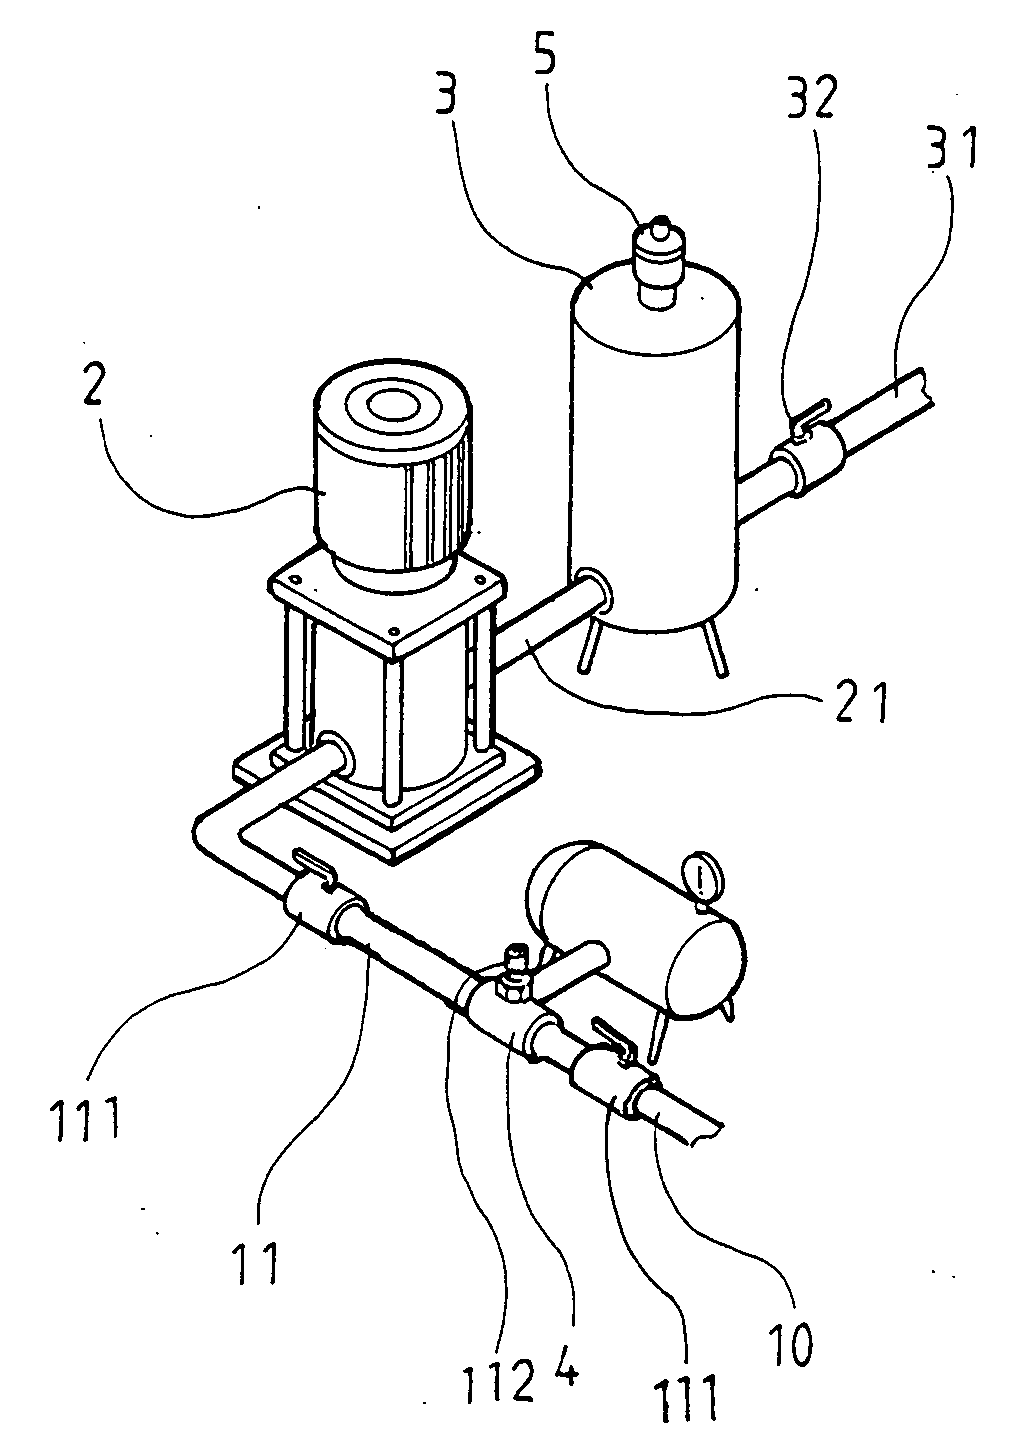 Cavitation generating system